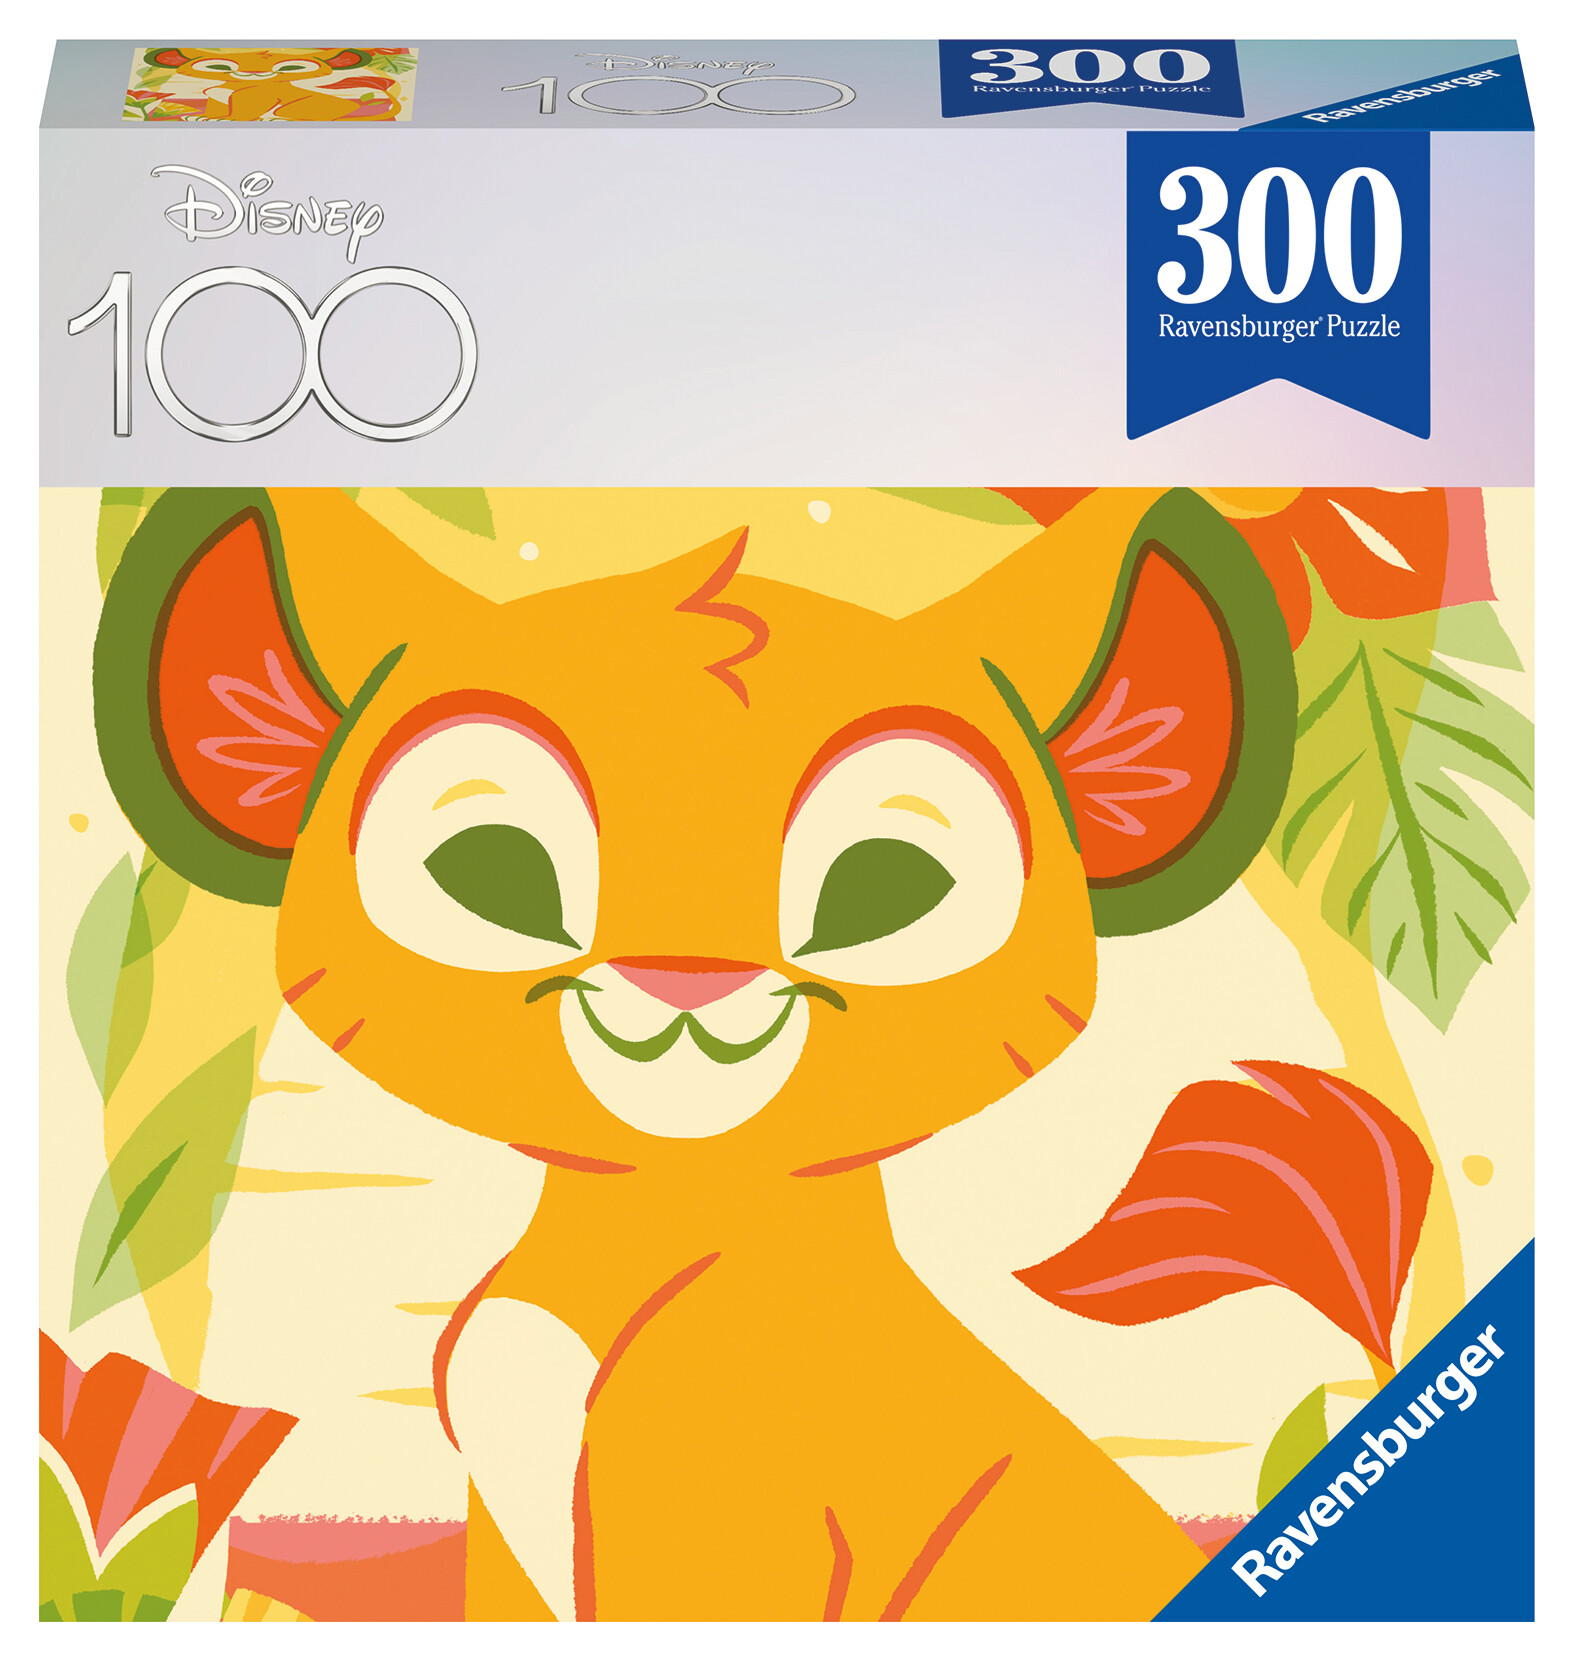 Ravensburger - puzzle disney il re leone, 300 pezzi, 8+, limited edition disney 100 - RAVENSBURGER